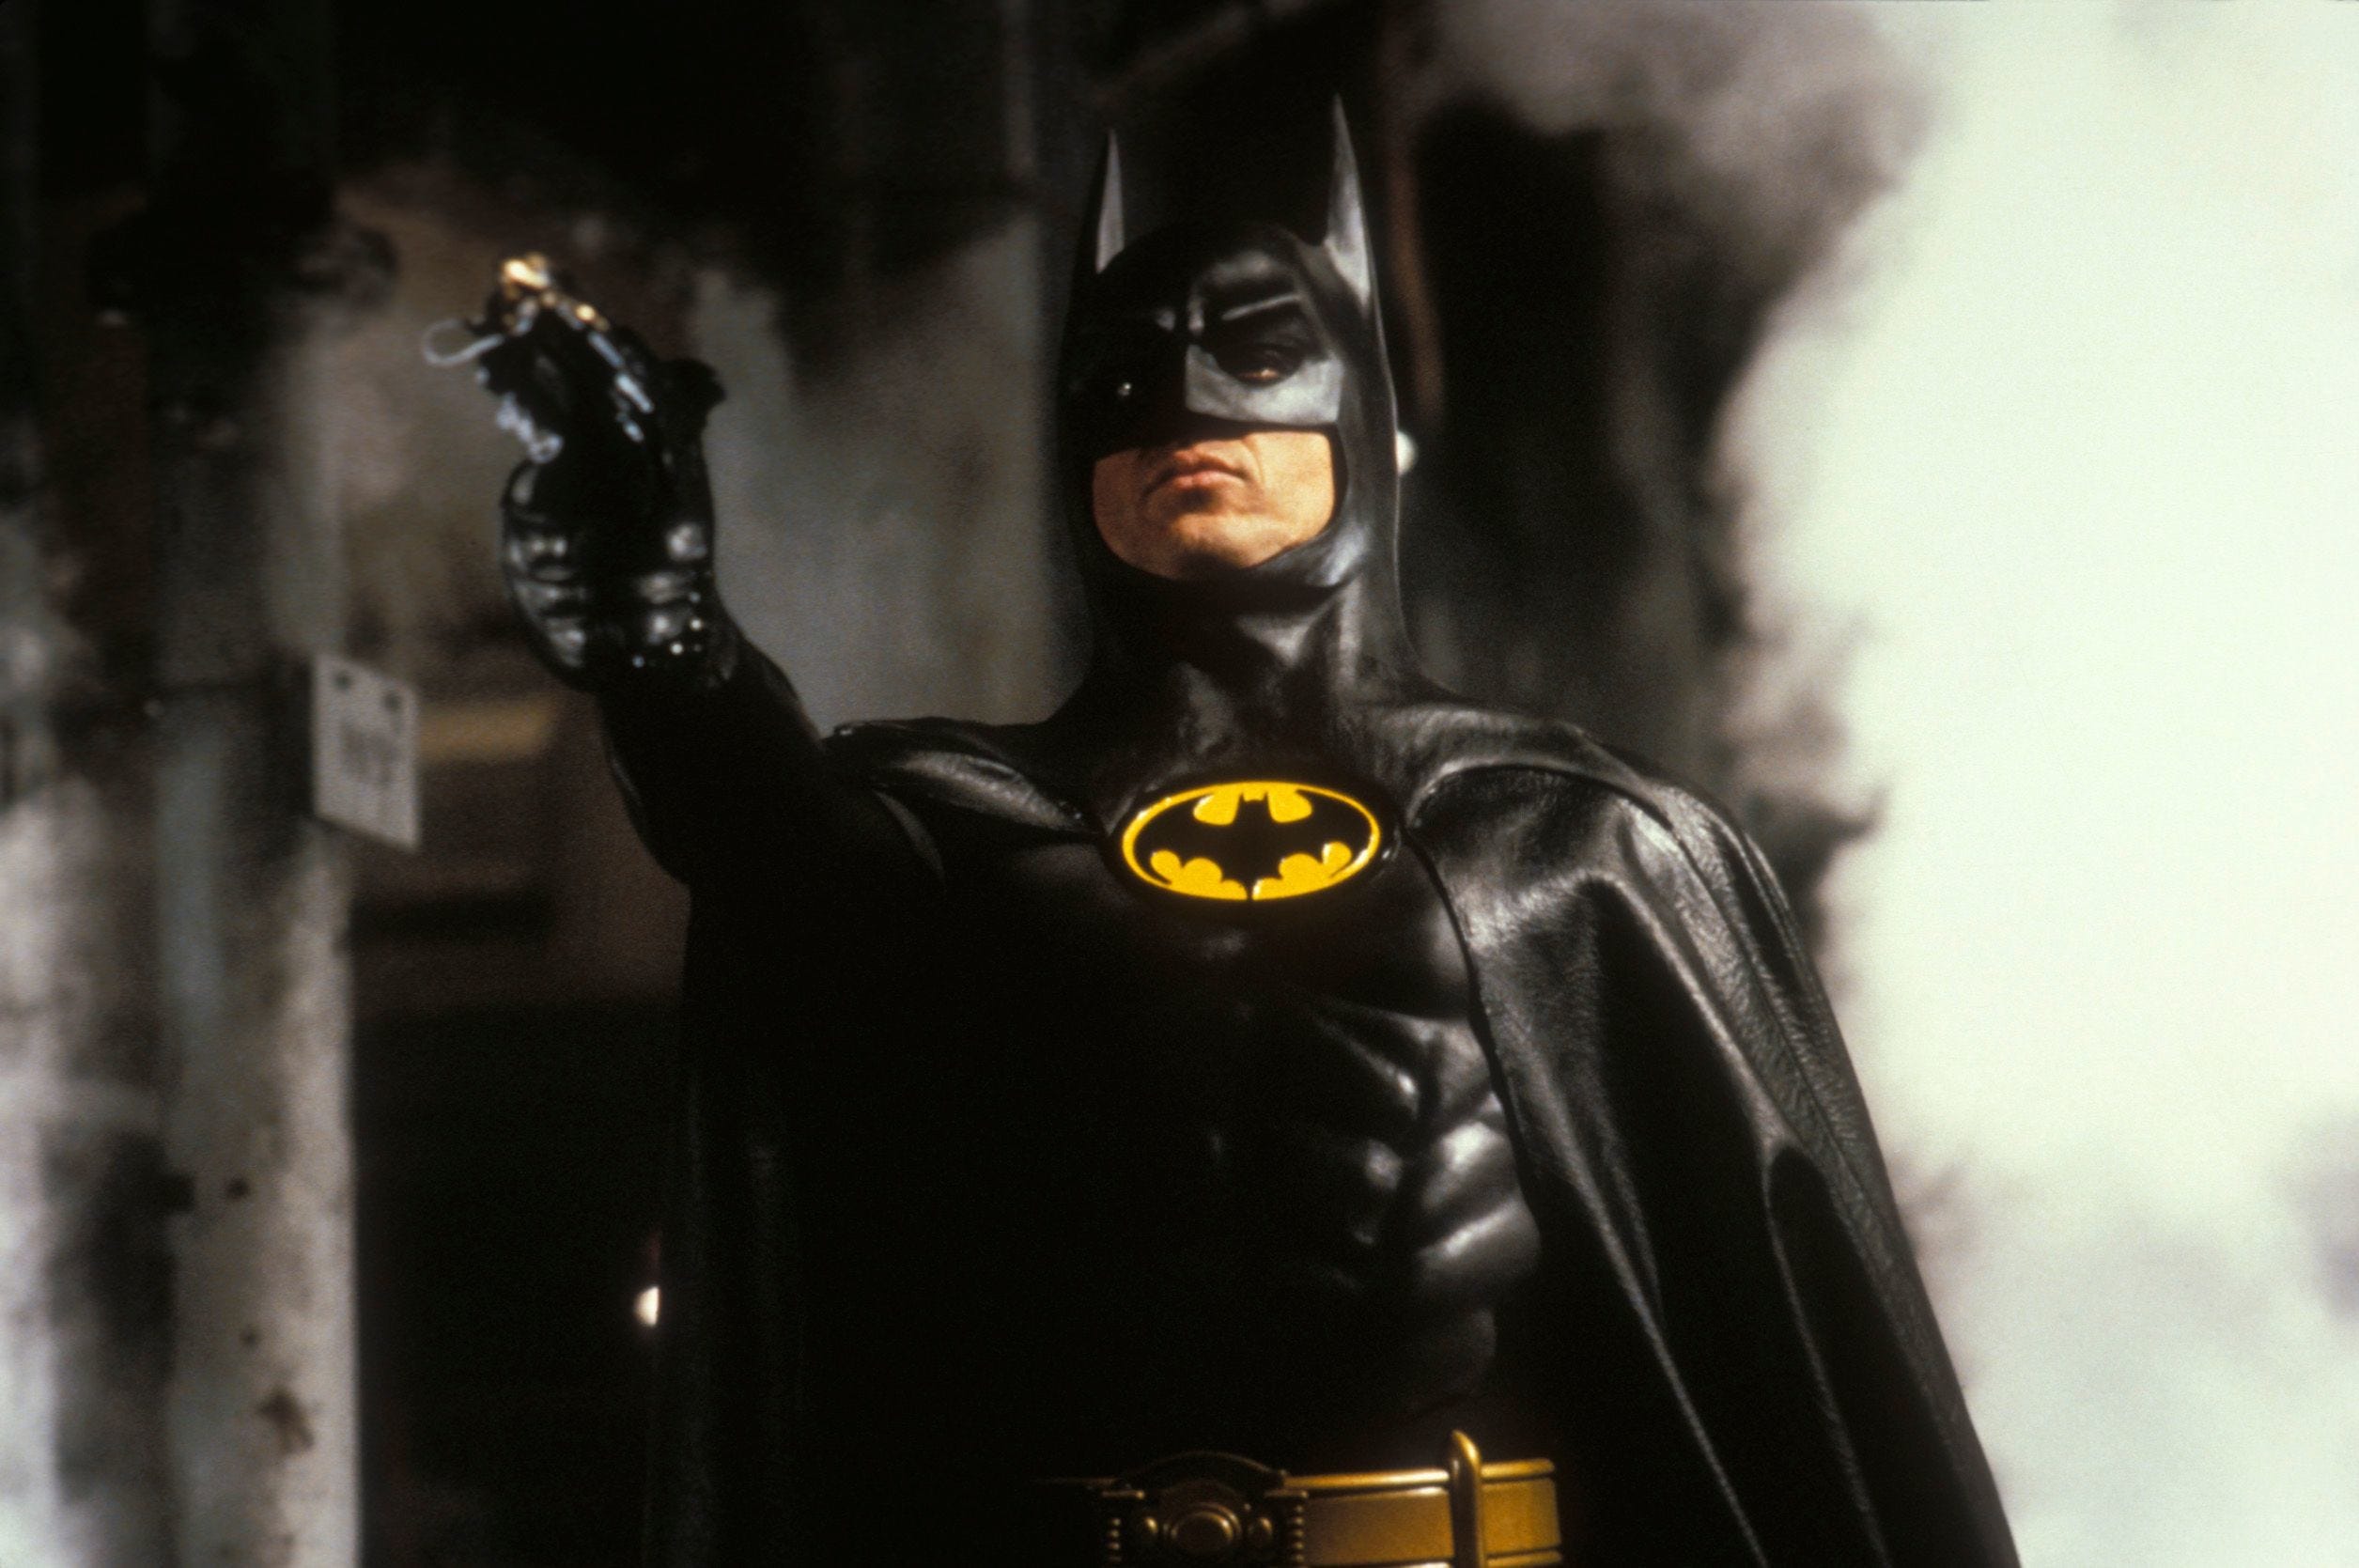 Michael Keaton to reprise 'Batman' role in HBO Max's 'Batgirl' in 2022